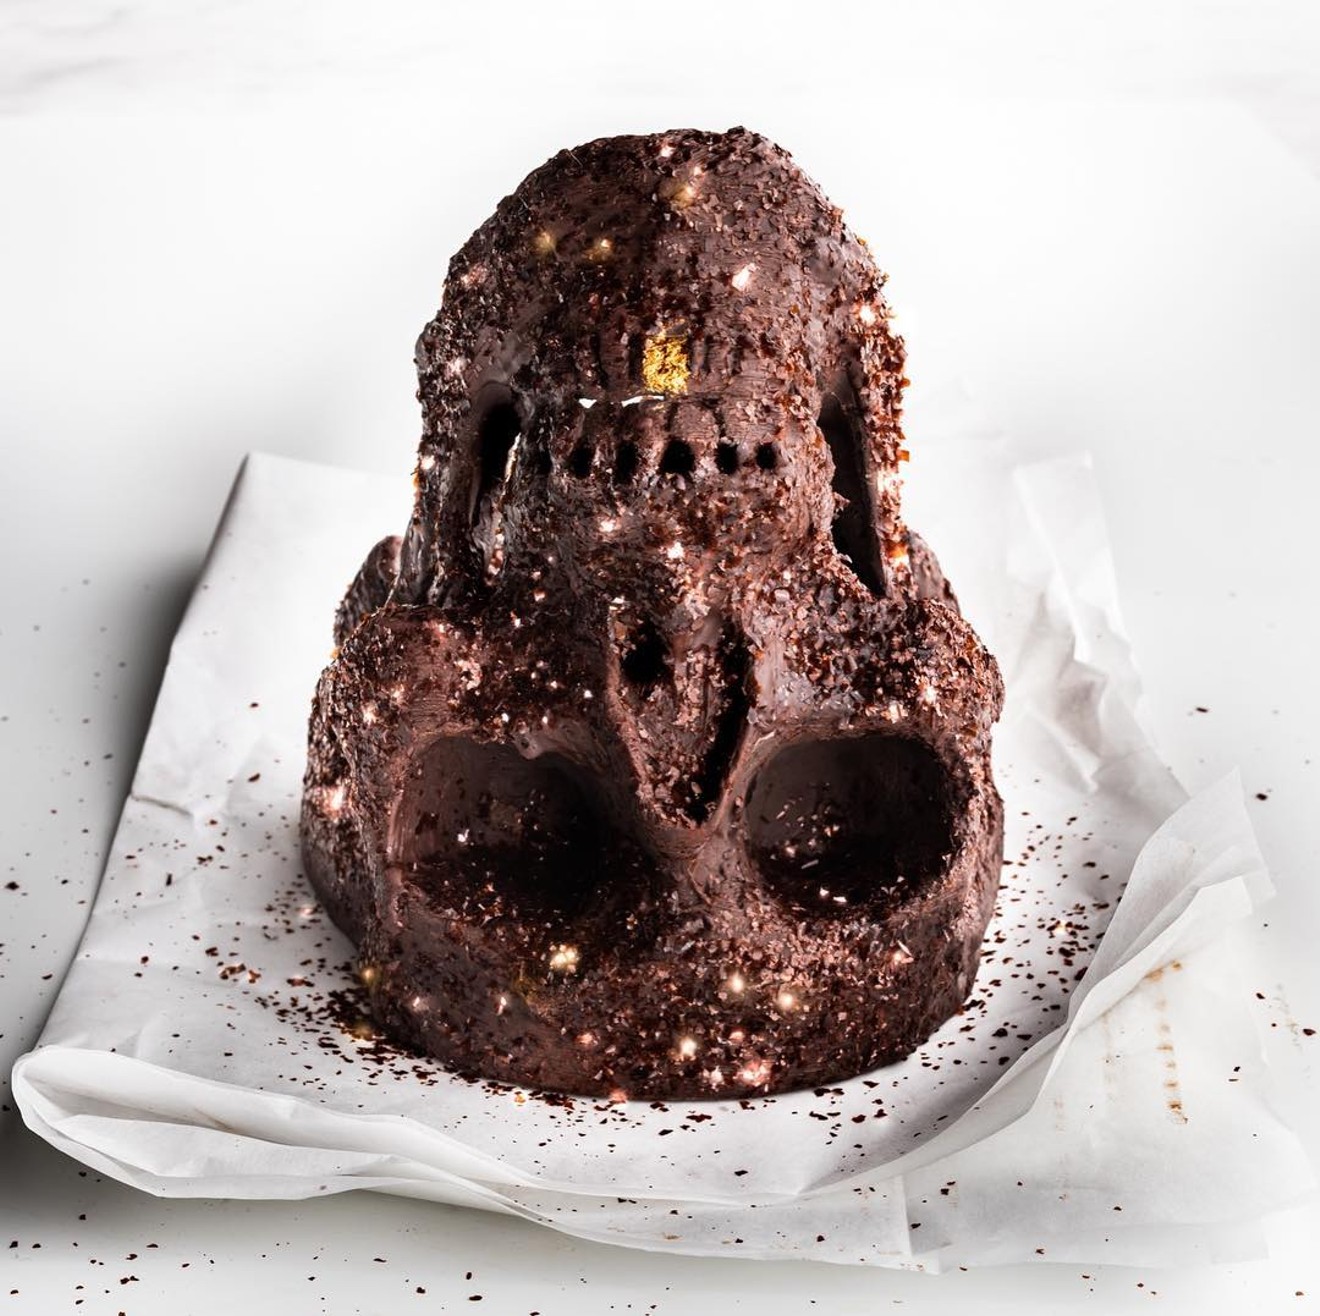 Dude, Sweet Chocolate's new Halloween treat will set you back 50 bones.